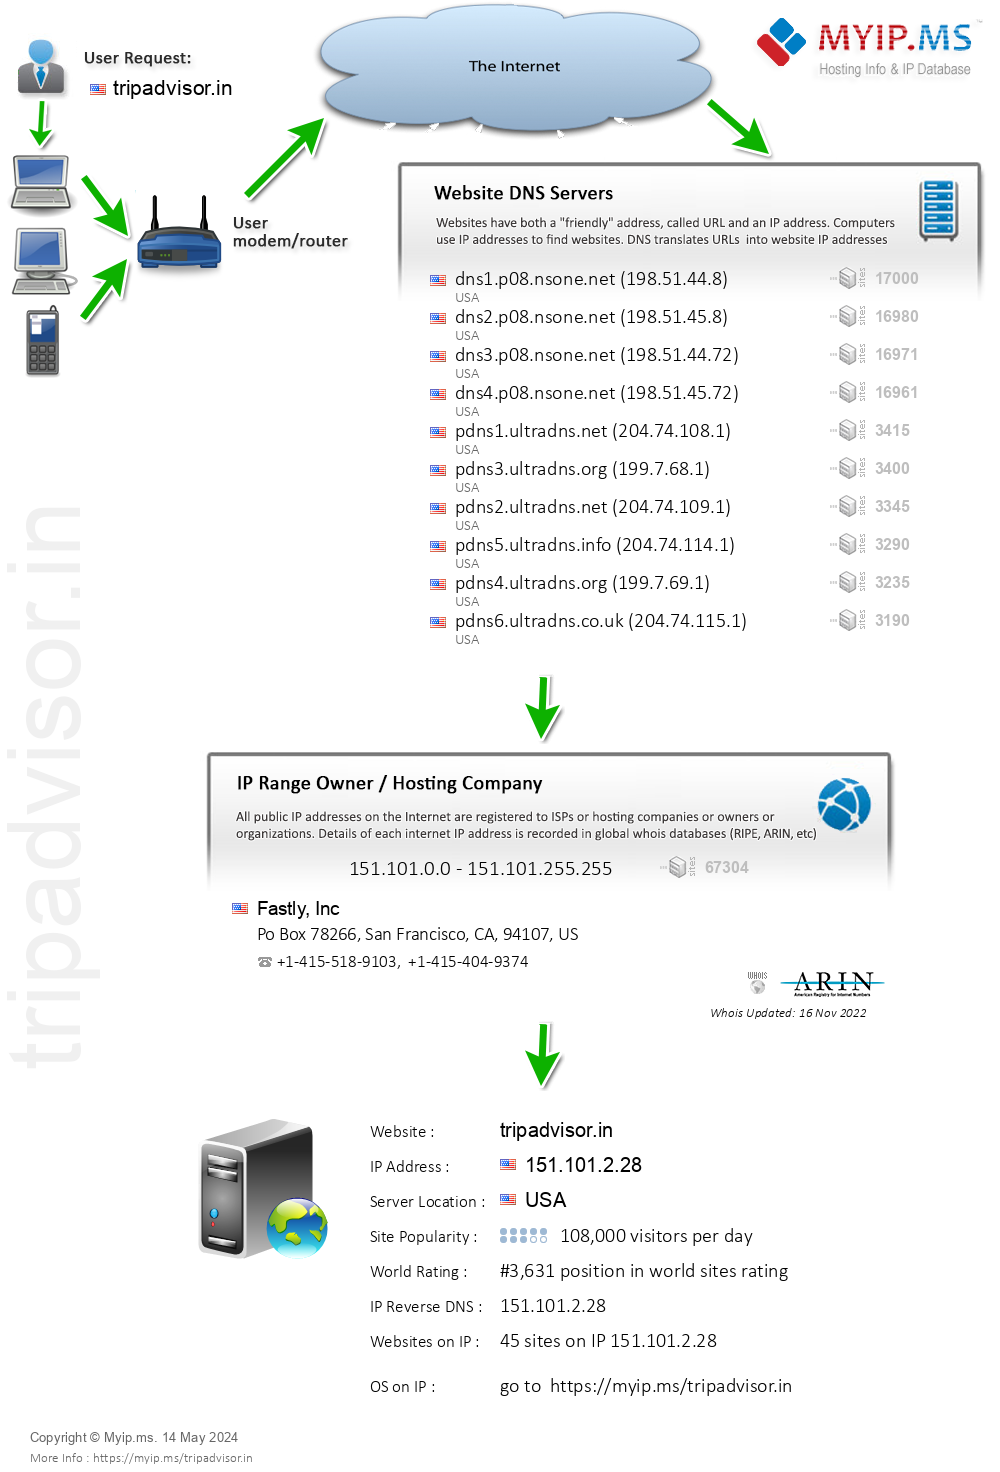 Tripadvisor.in - Website Hosting Visual IP Diagram